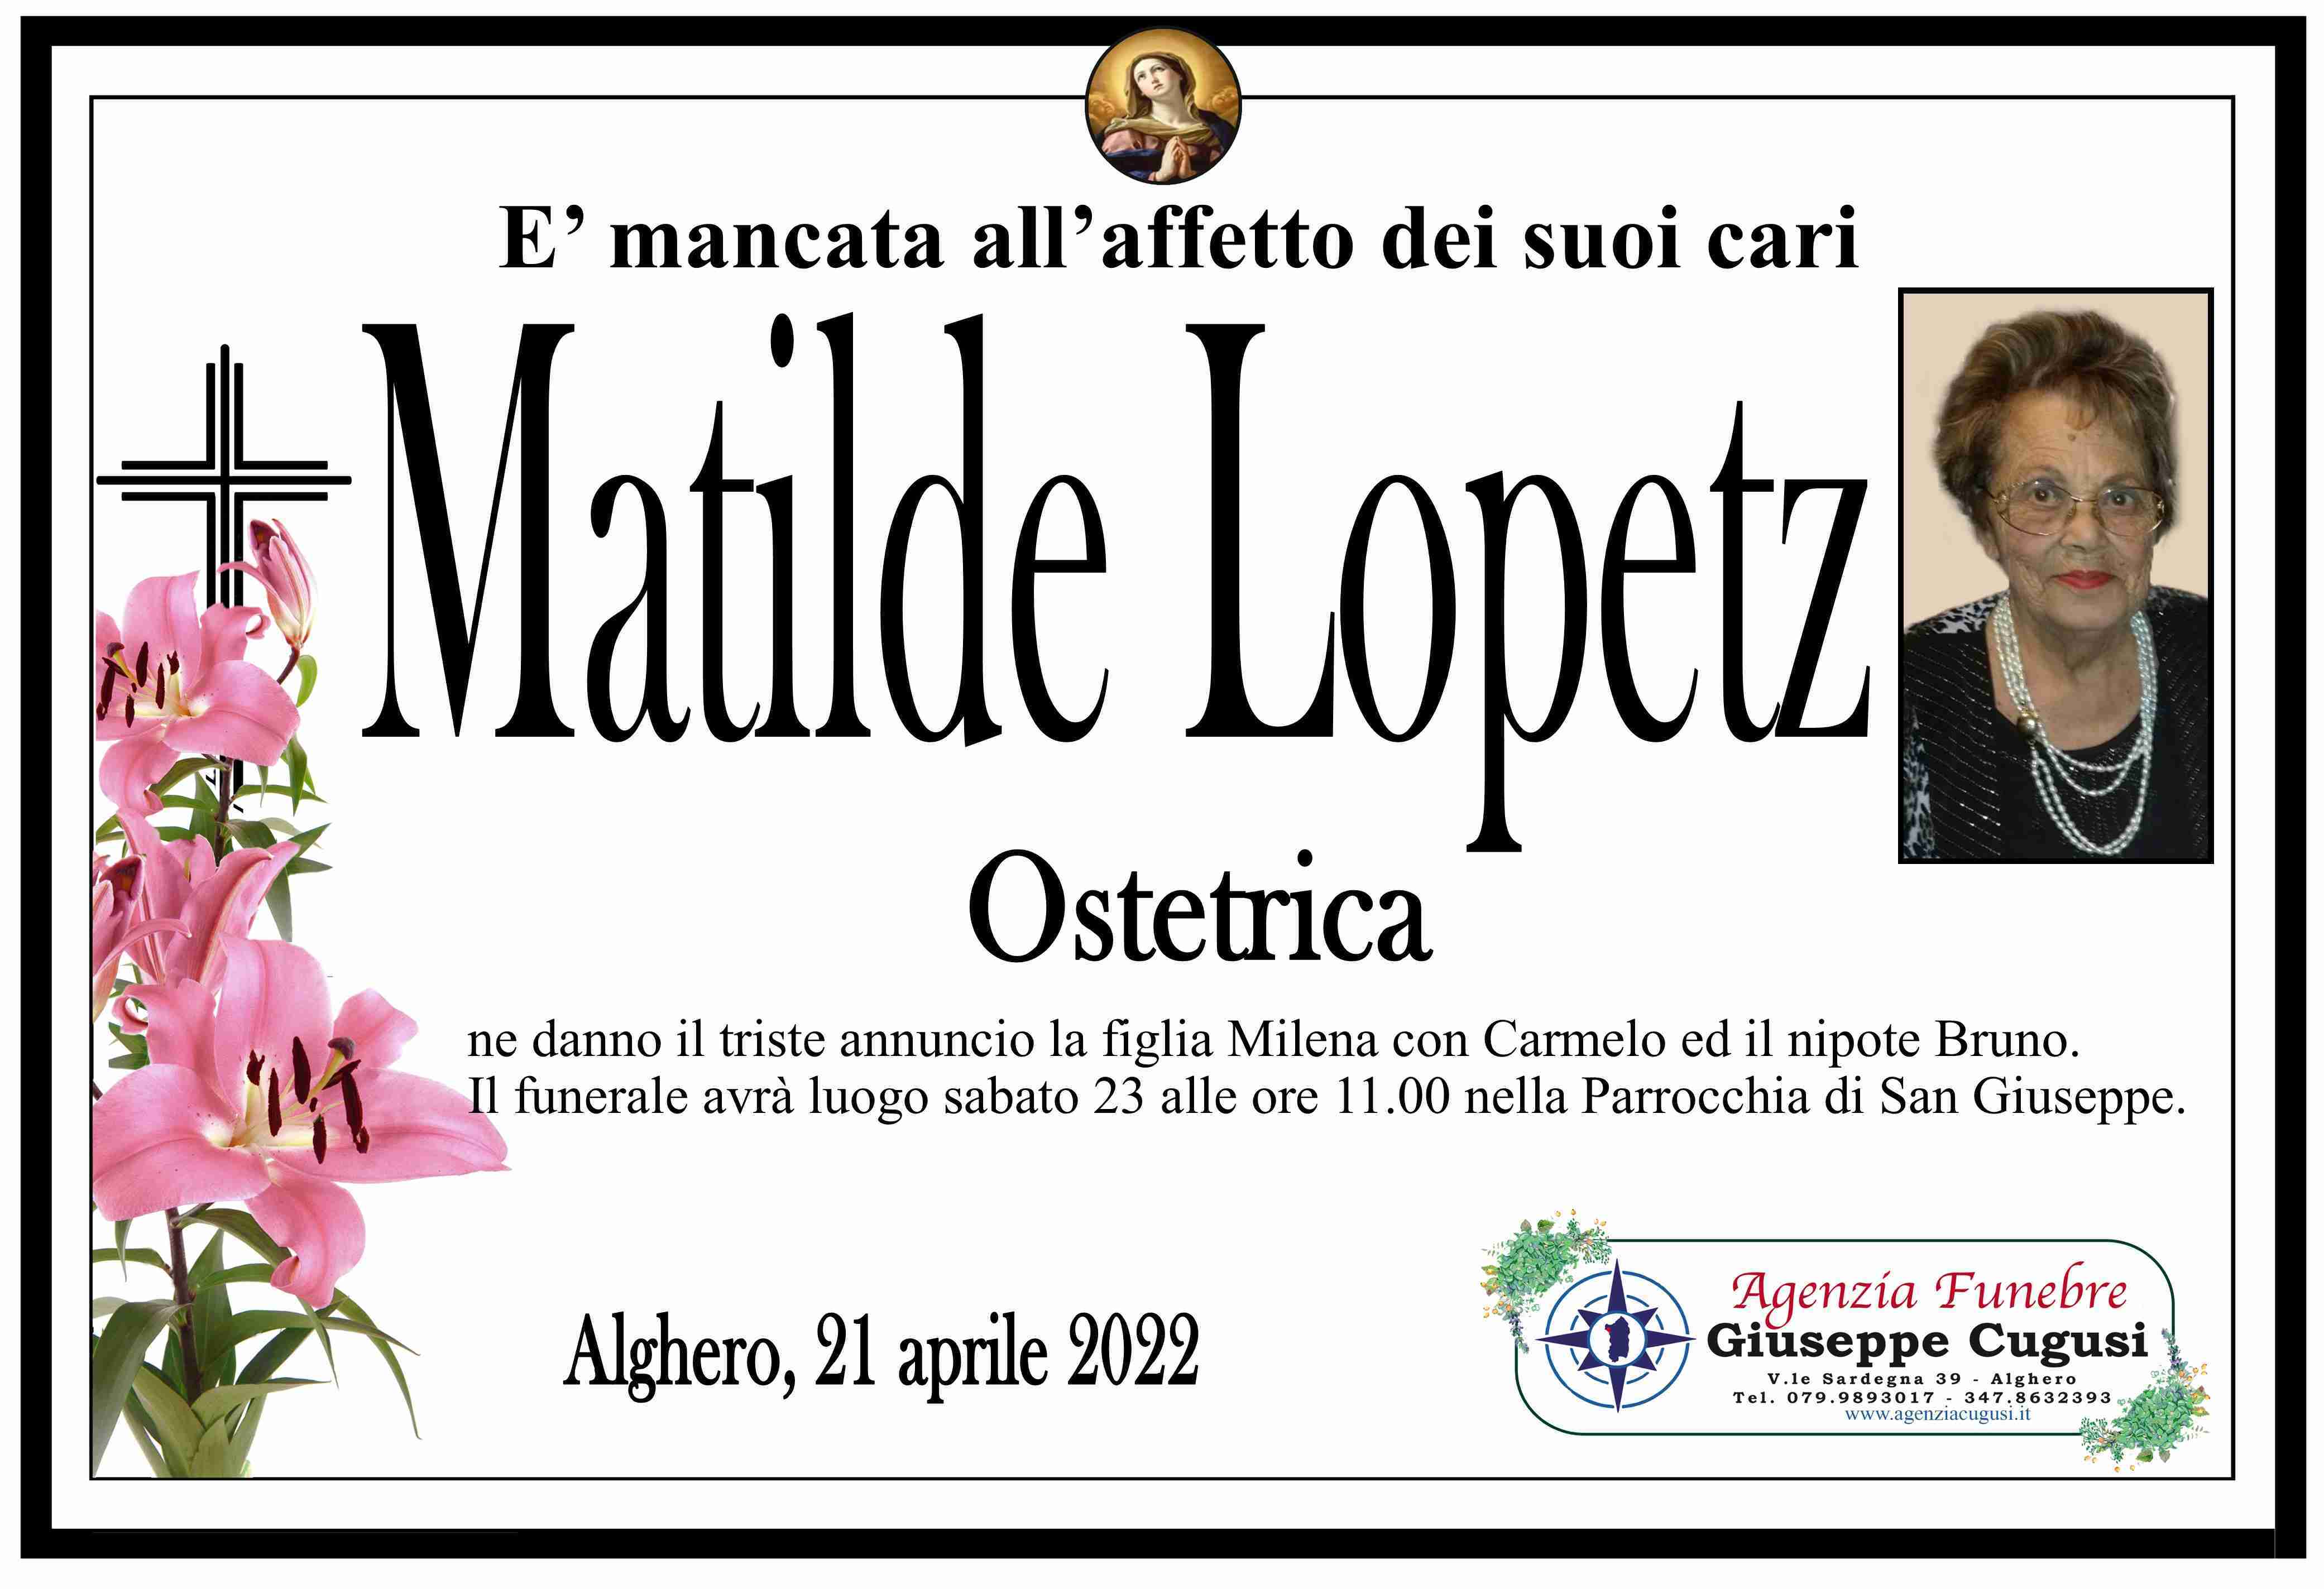 Matilde Lopetz